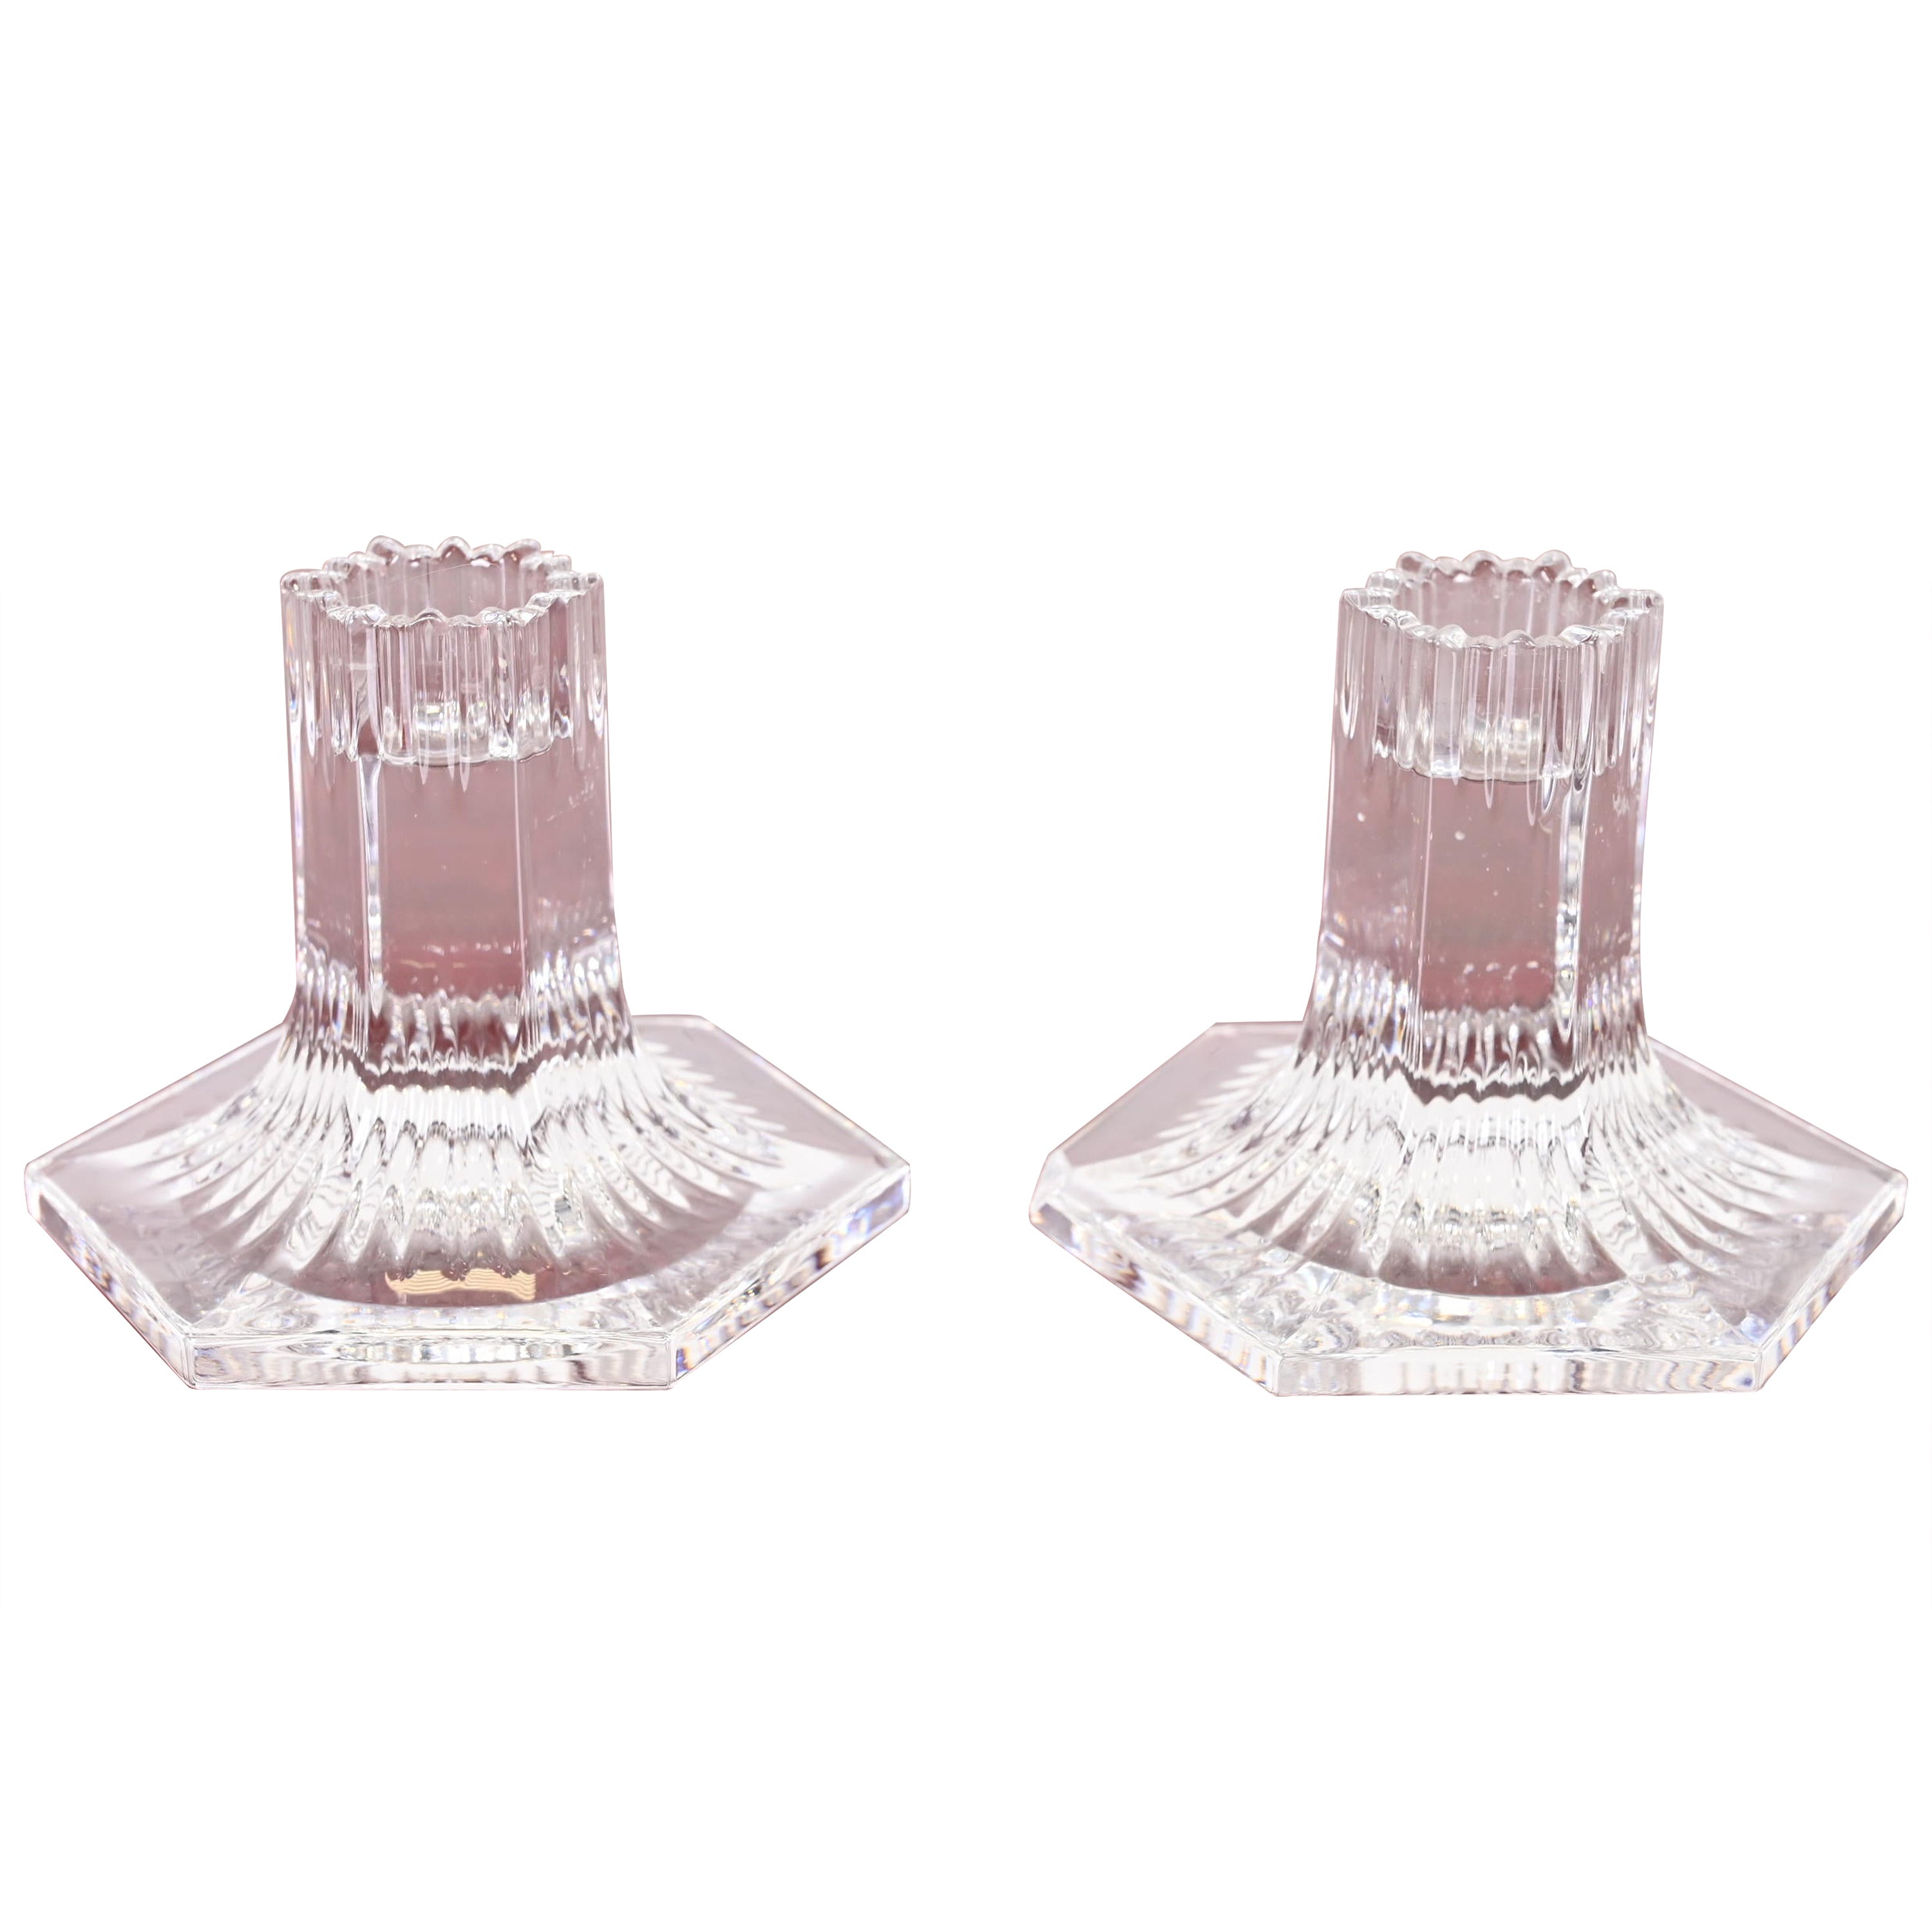 Tiffany & Co. Chandeliers en cristal clair, paire